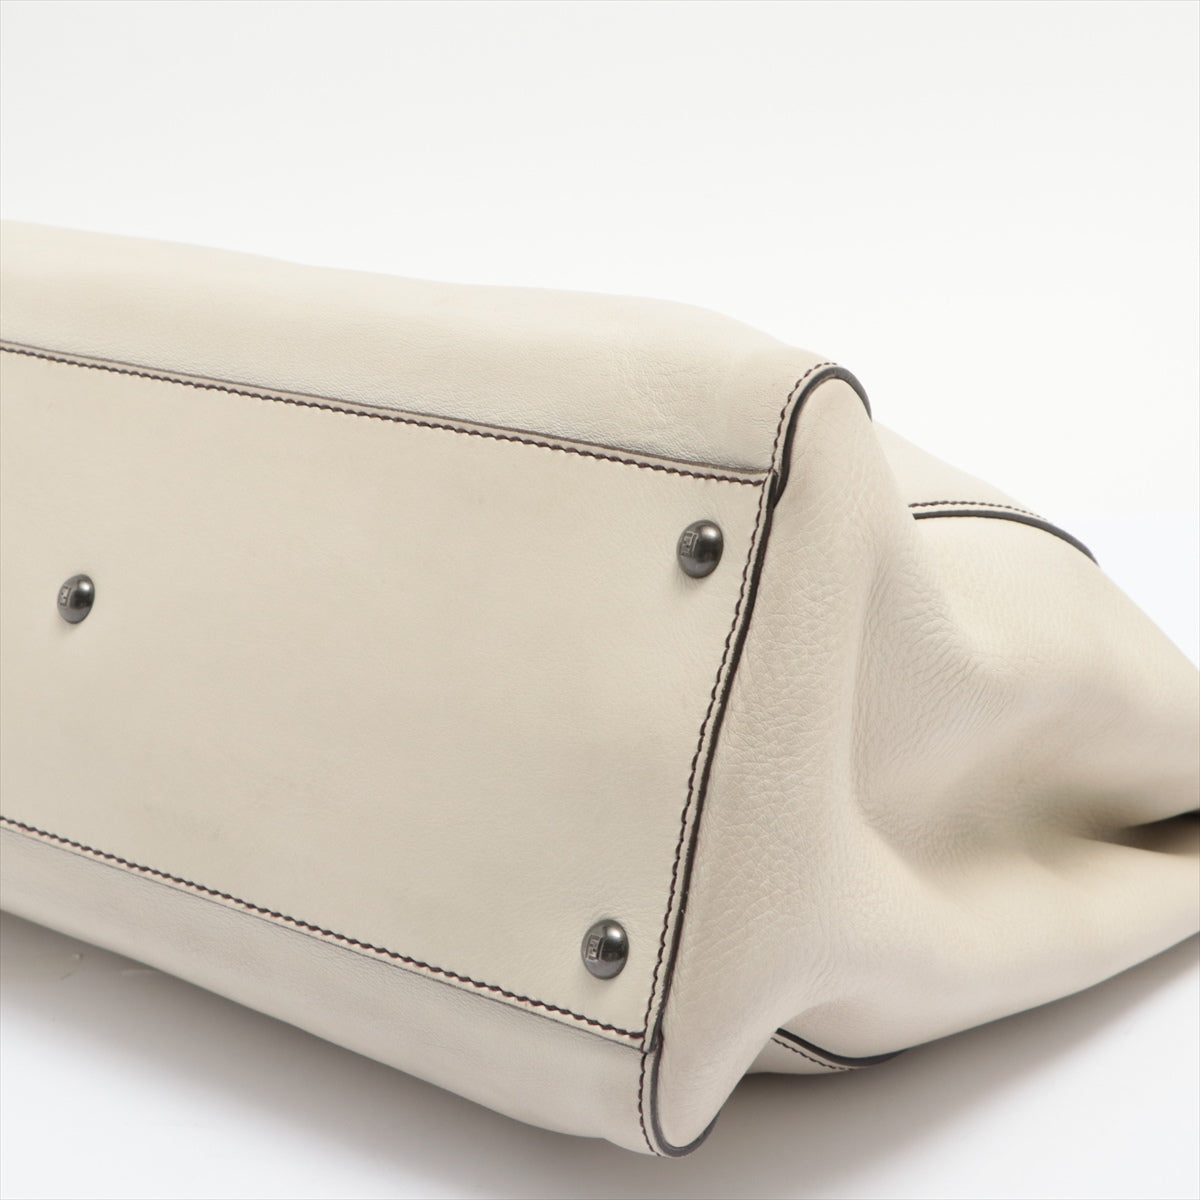 Fendi Peek-A-Boo Large Leather Handbag Ivory 8BN210